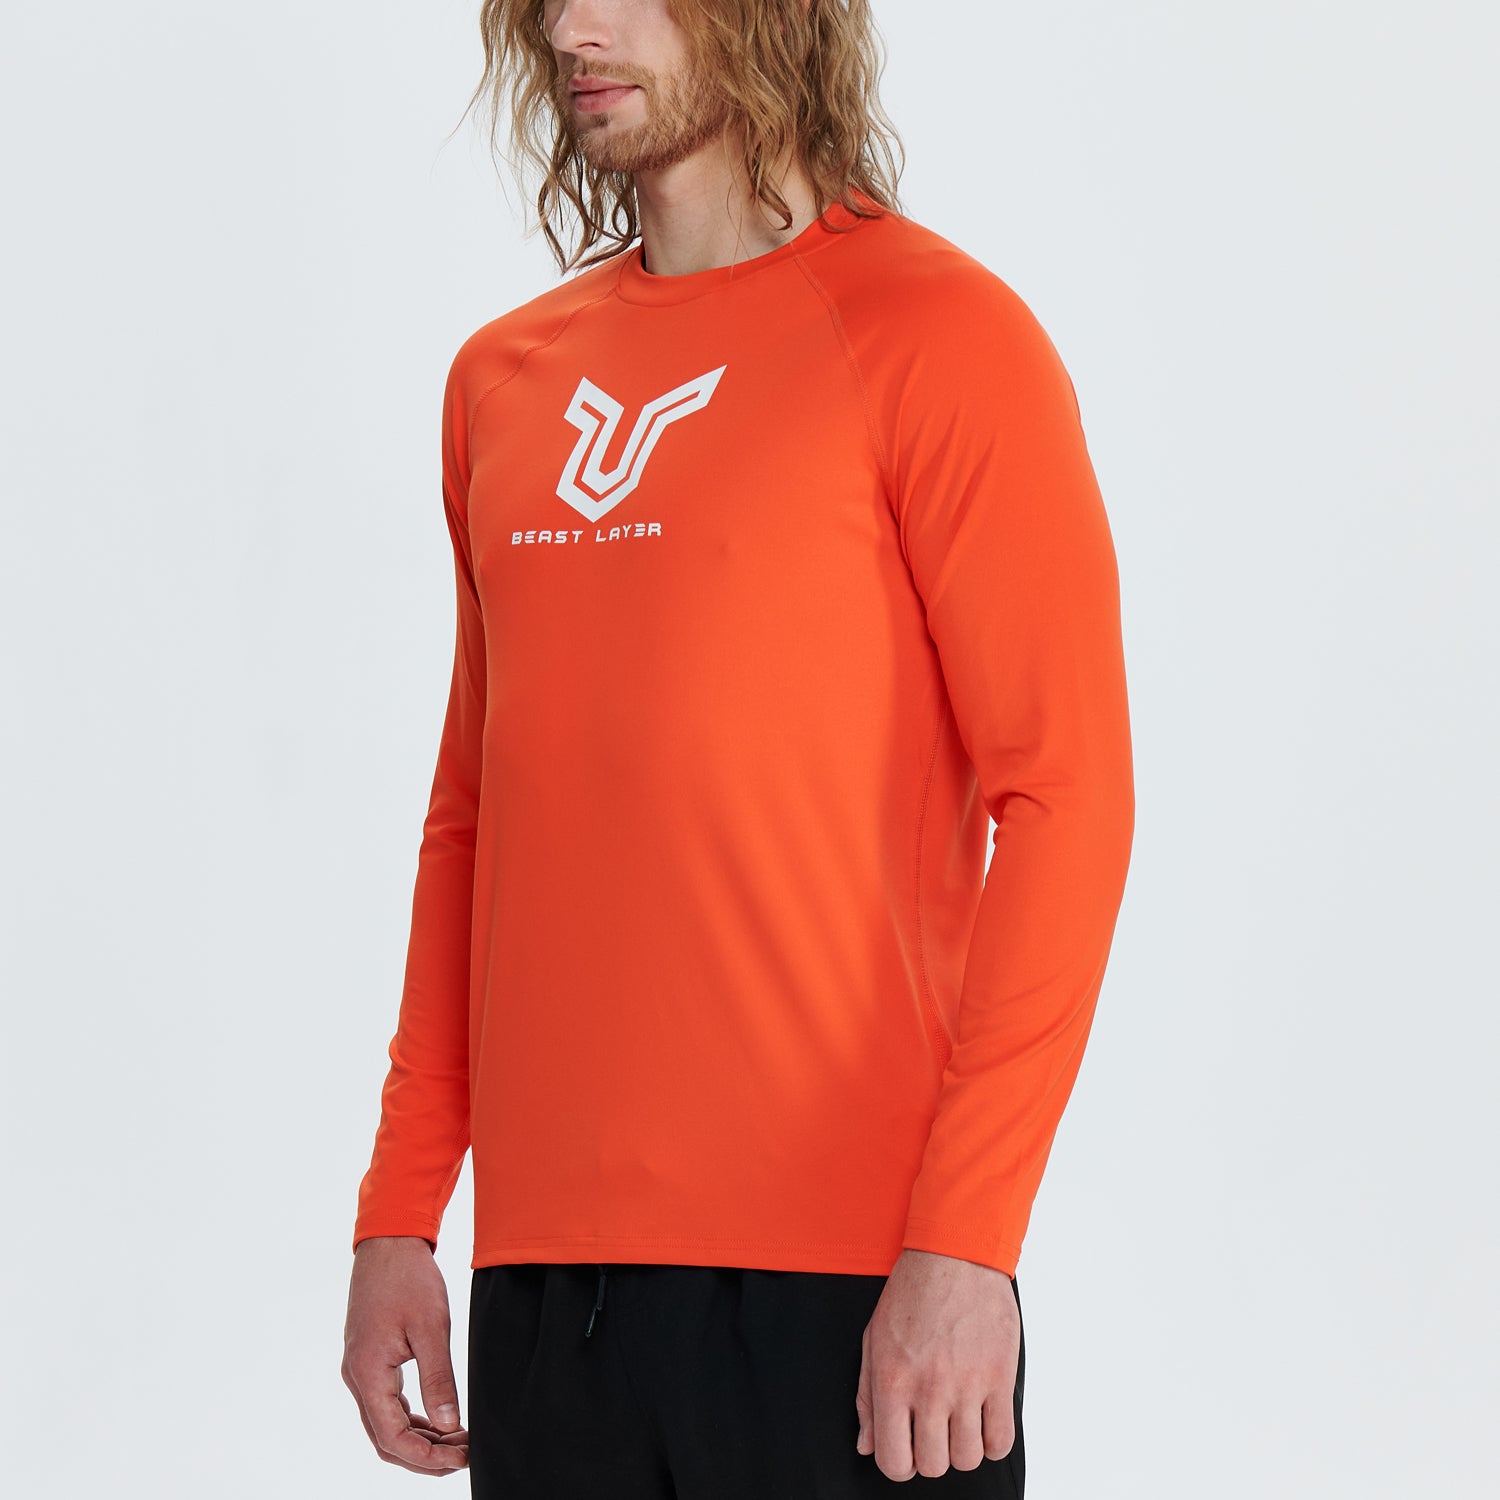 Beast Surf Shirt UPF50+ Rash Guard for Men - Orange